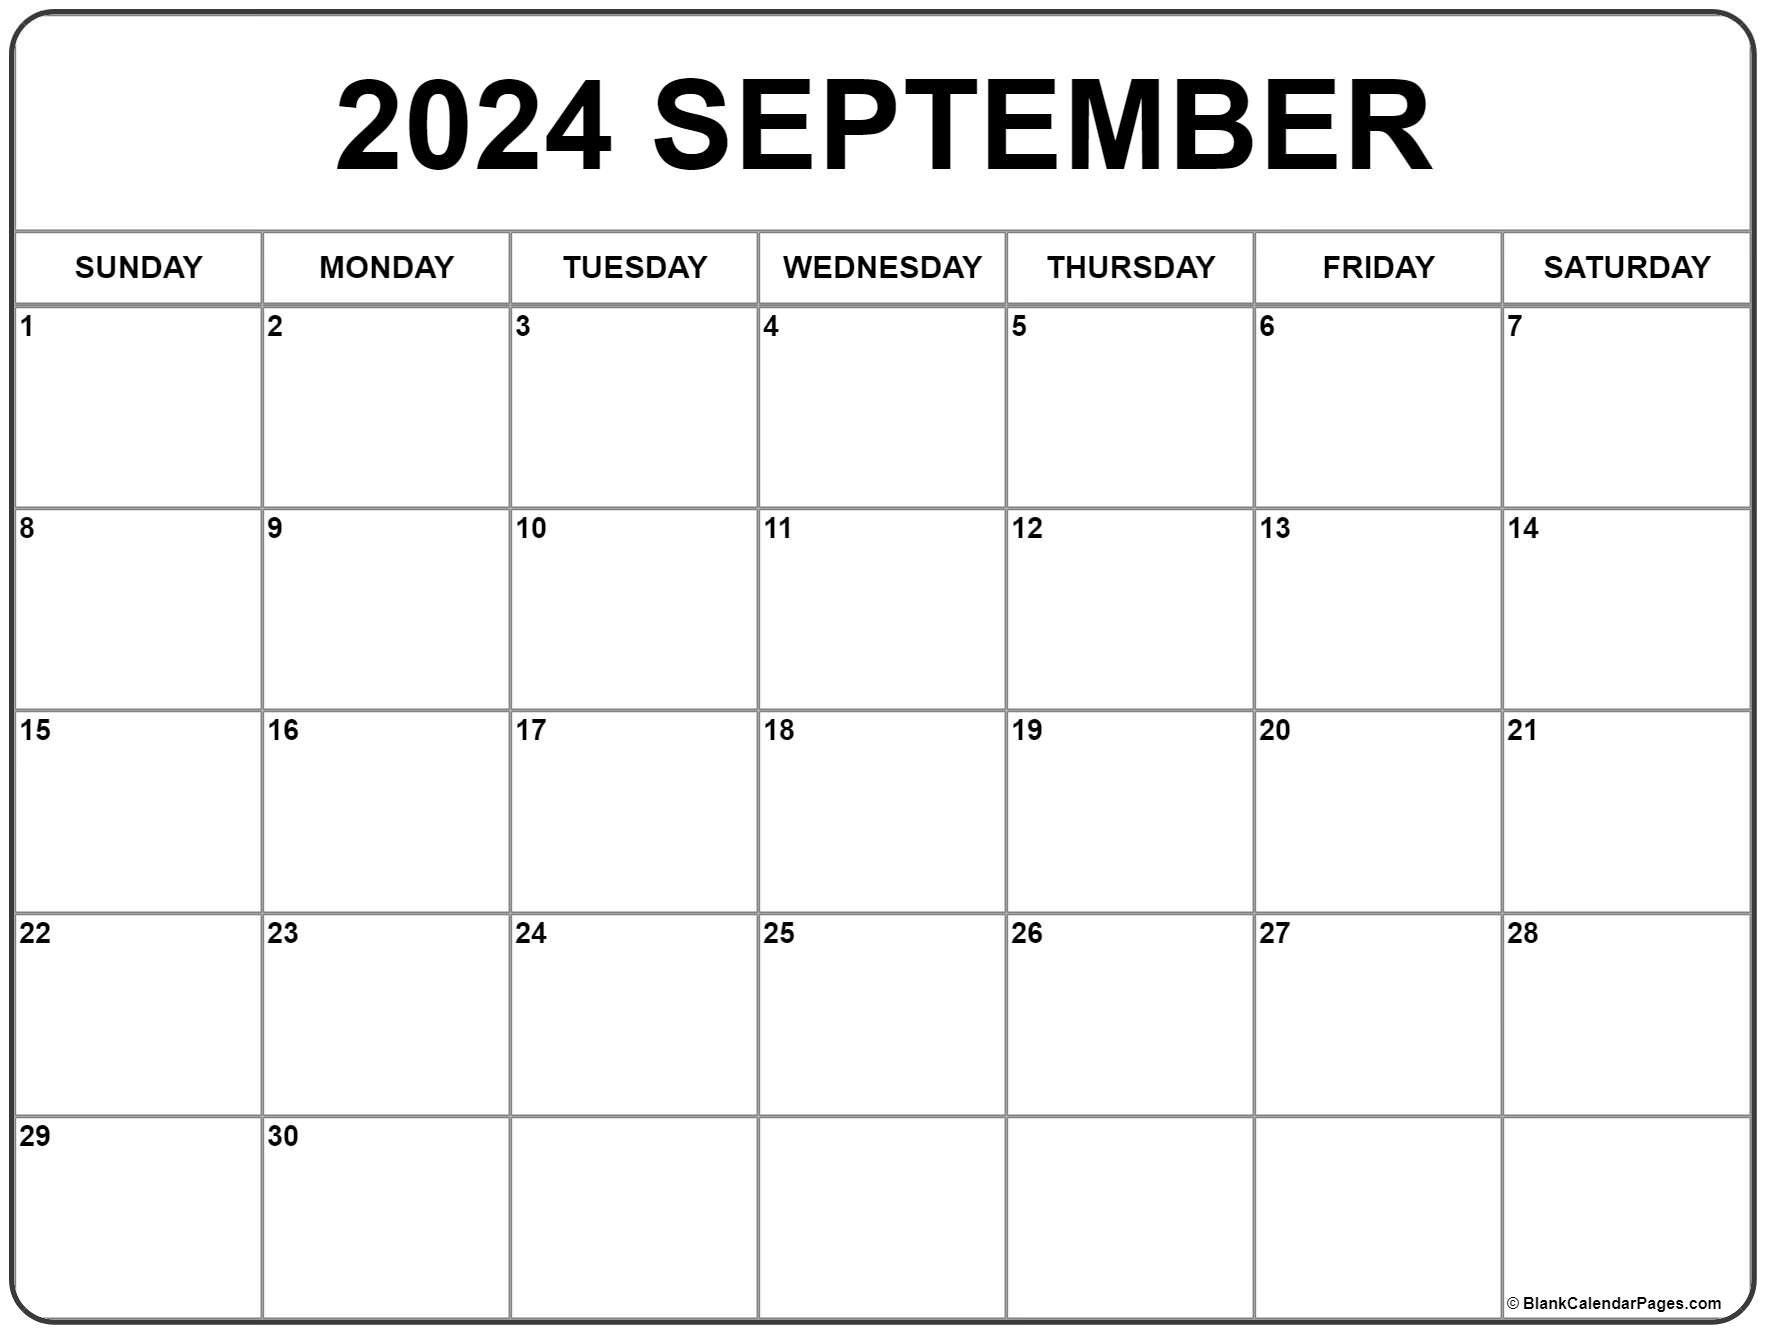 Free Printable Sept 2022 Calendar September 2022 Calendar | Free Printable Calendar Templates